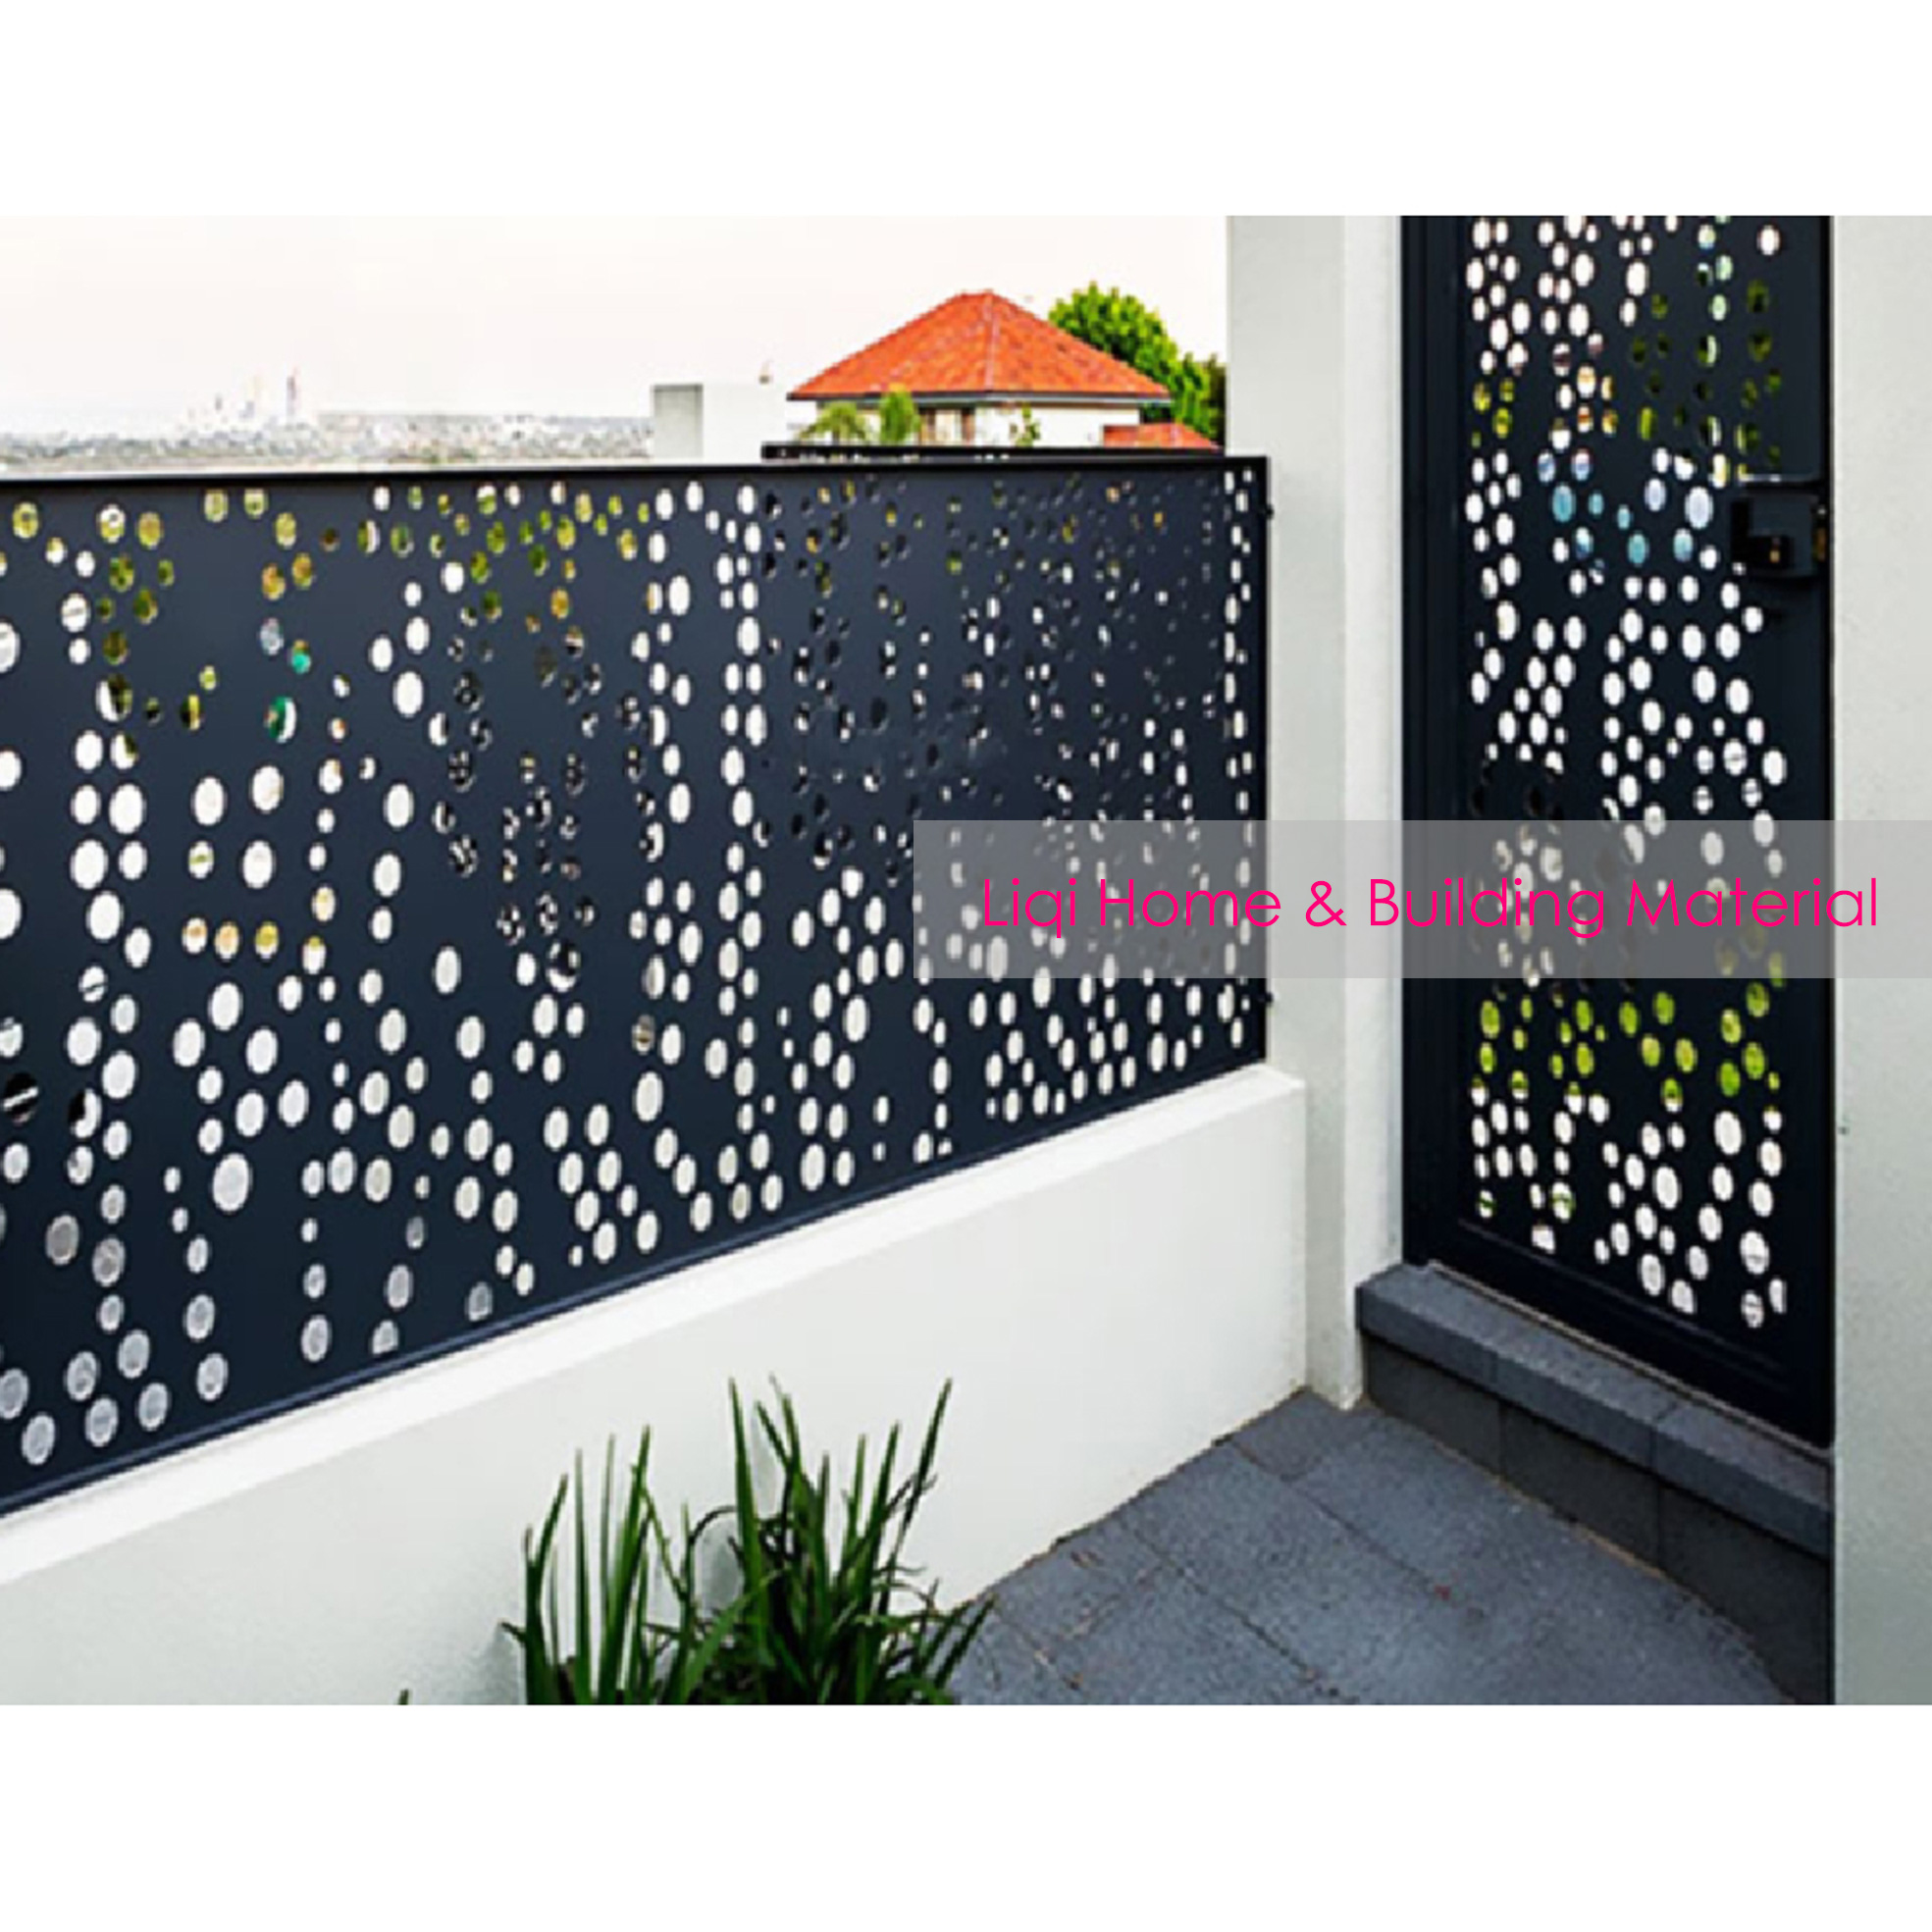 Courtyard Circular Pattern Black Stainless Steel Fence